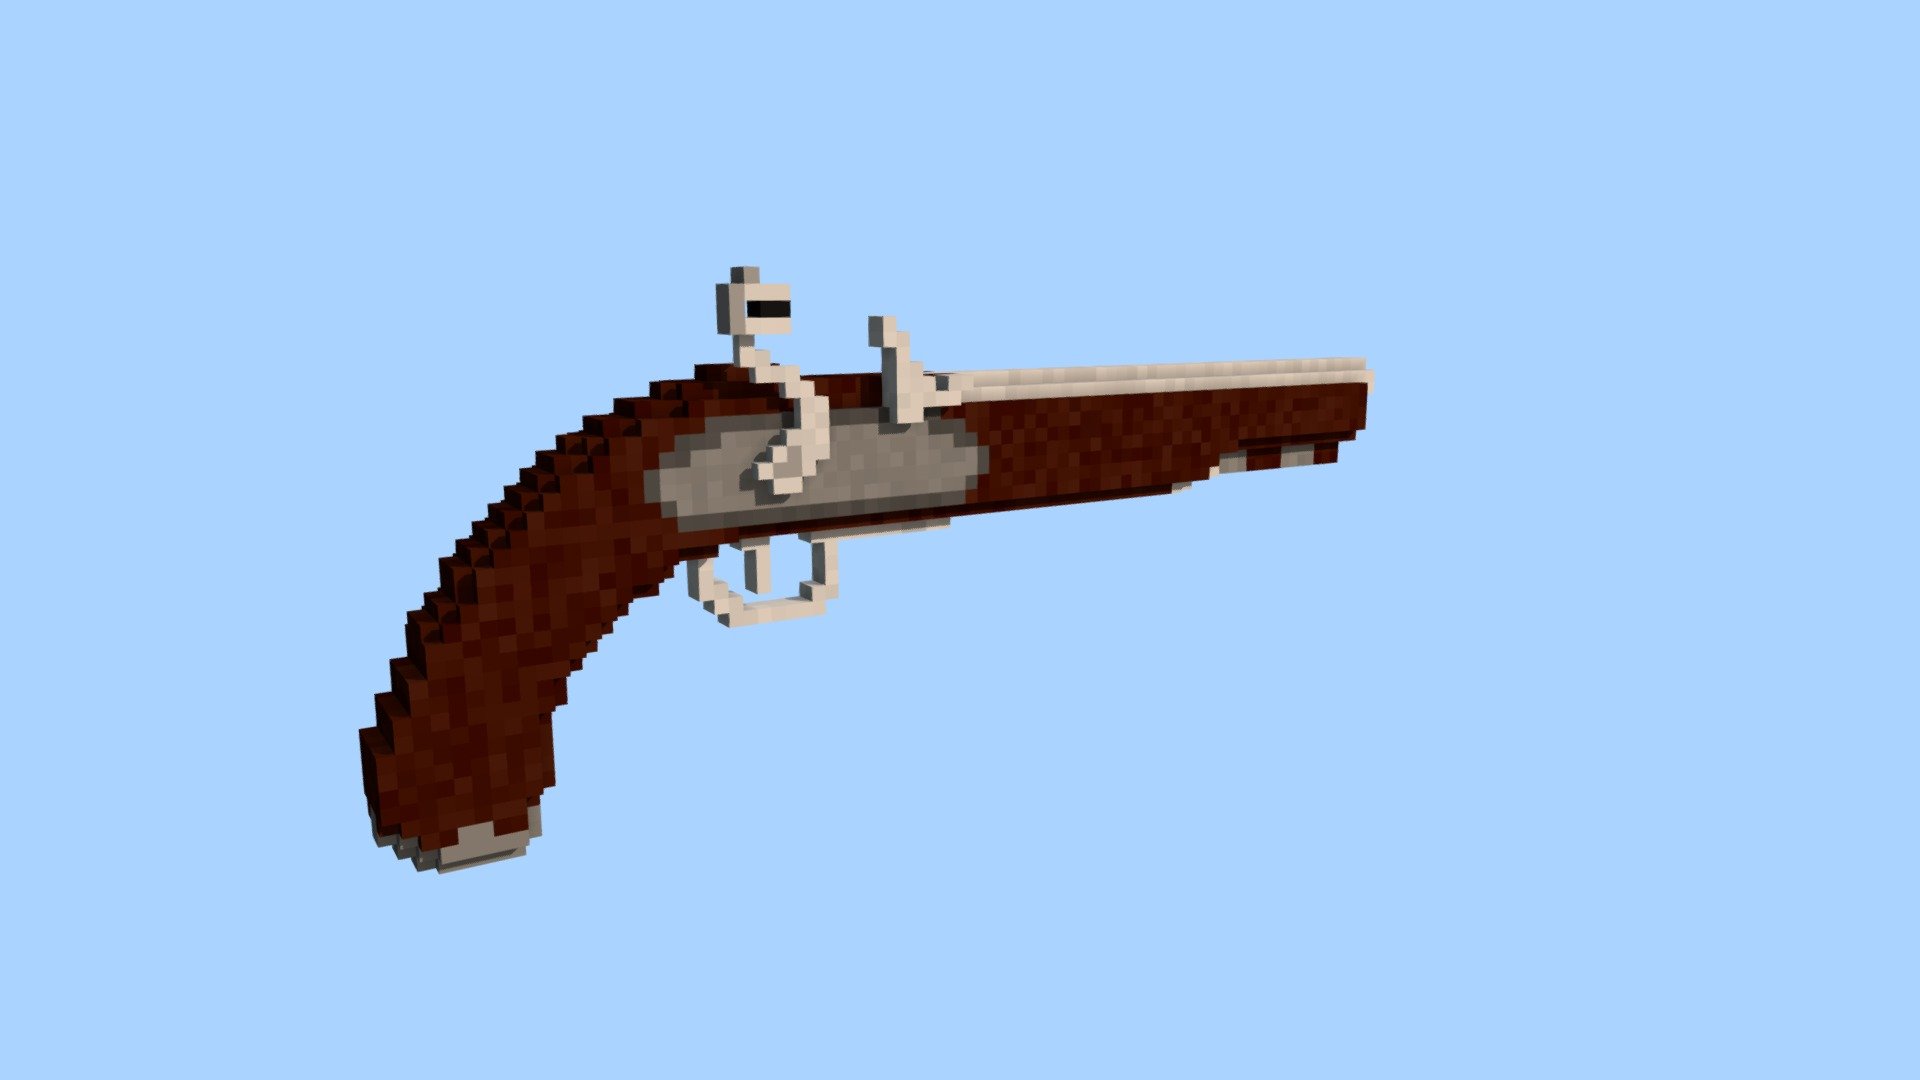 minecraft pistol